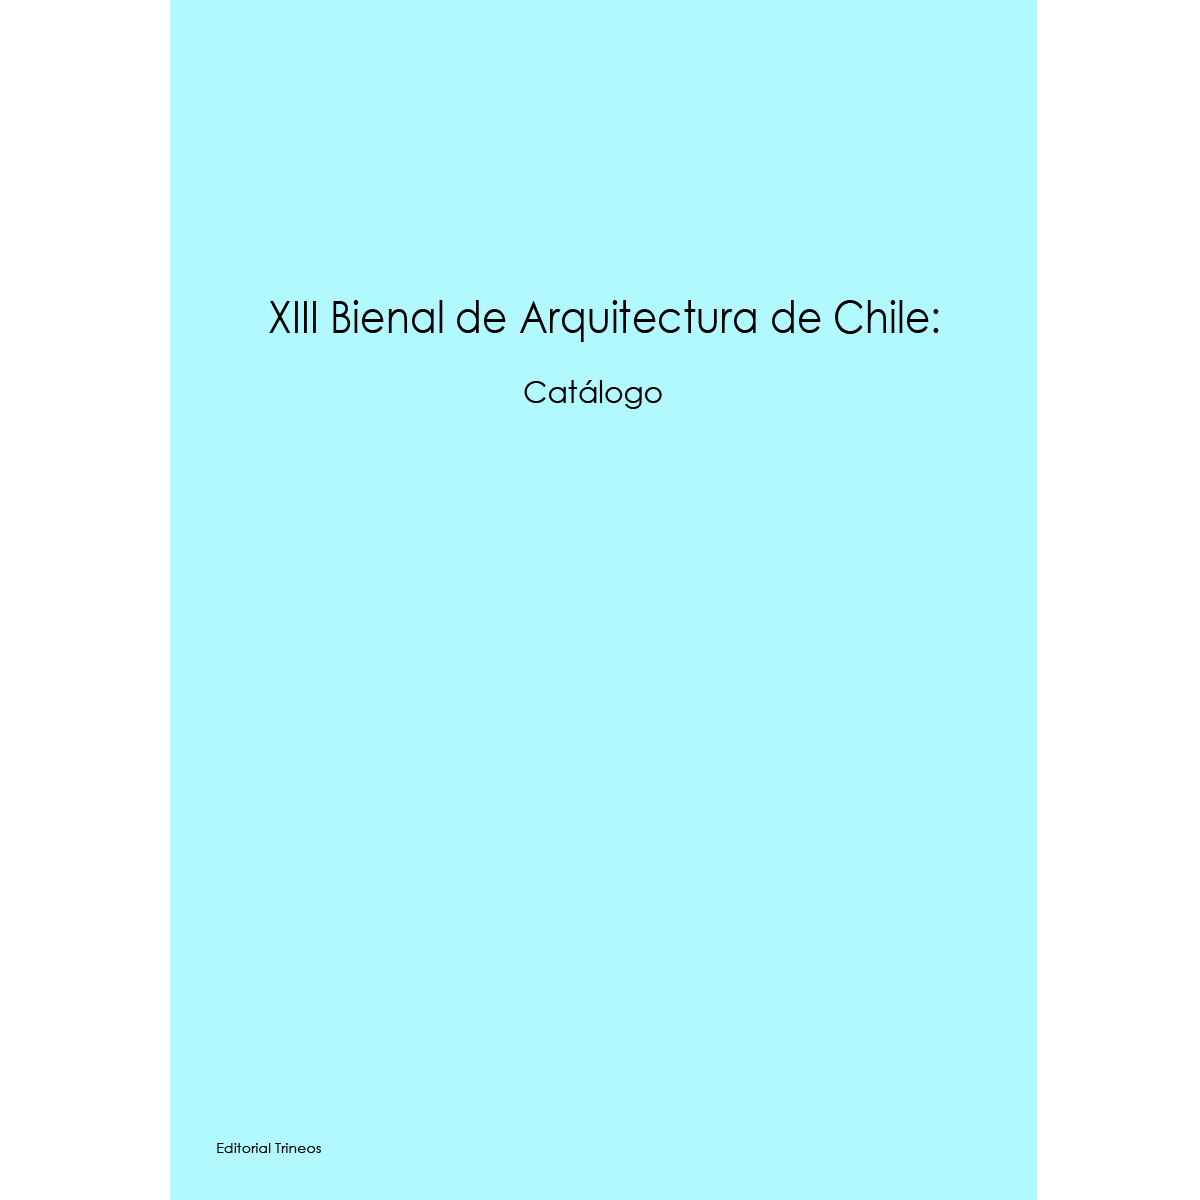 XIII Bienal de Arquitectura de Chile